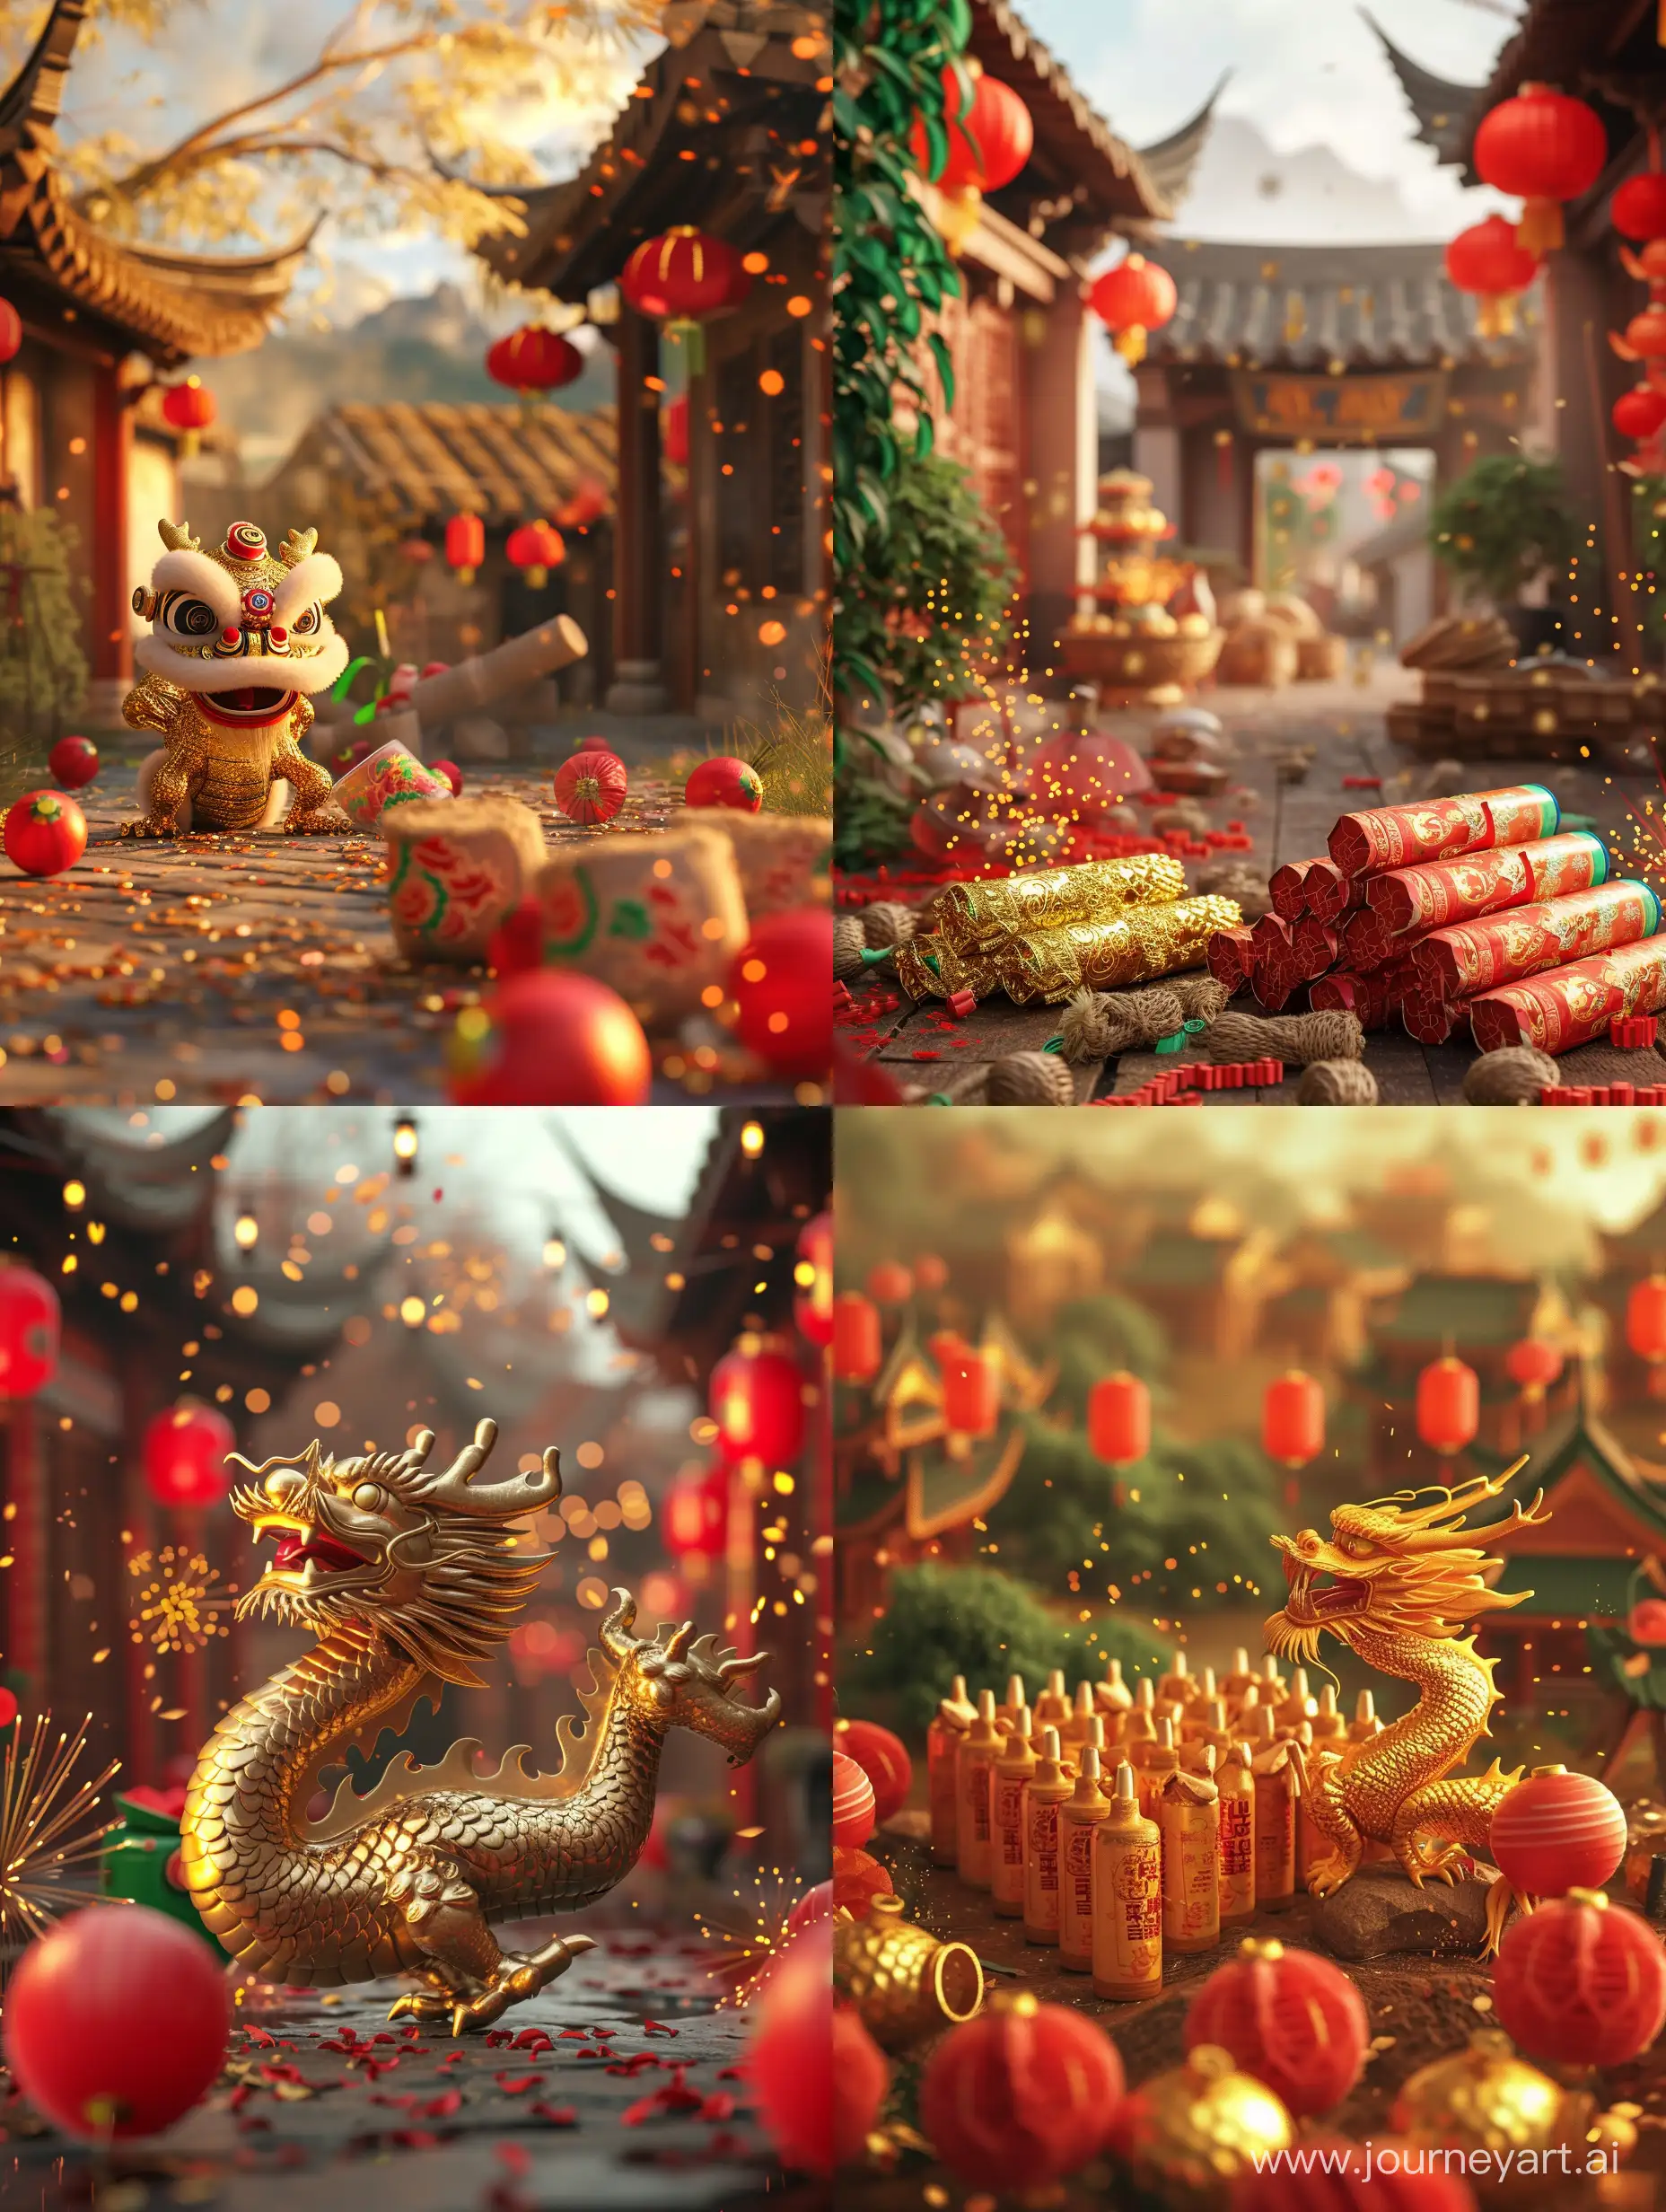 (中国神话里面的金龙形象),（祥和可爱）, (Lunar New Year celebration), (Firecrackers), (Red lanterns), (Joyful atmosphere), (Traditional Asian village), (Nelson Wu), (Red), (Gold), (Green), (High precision), (Medium shot).